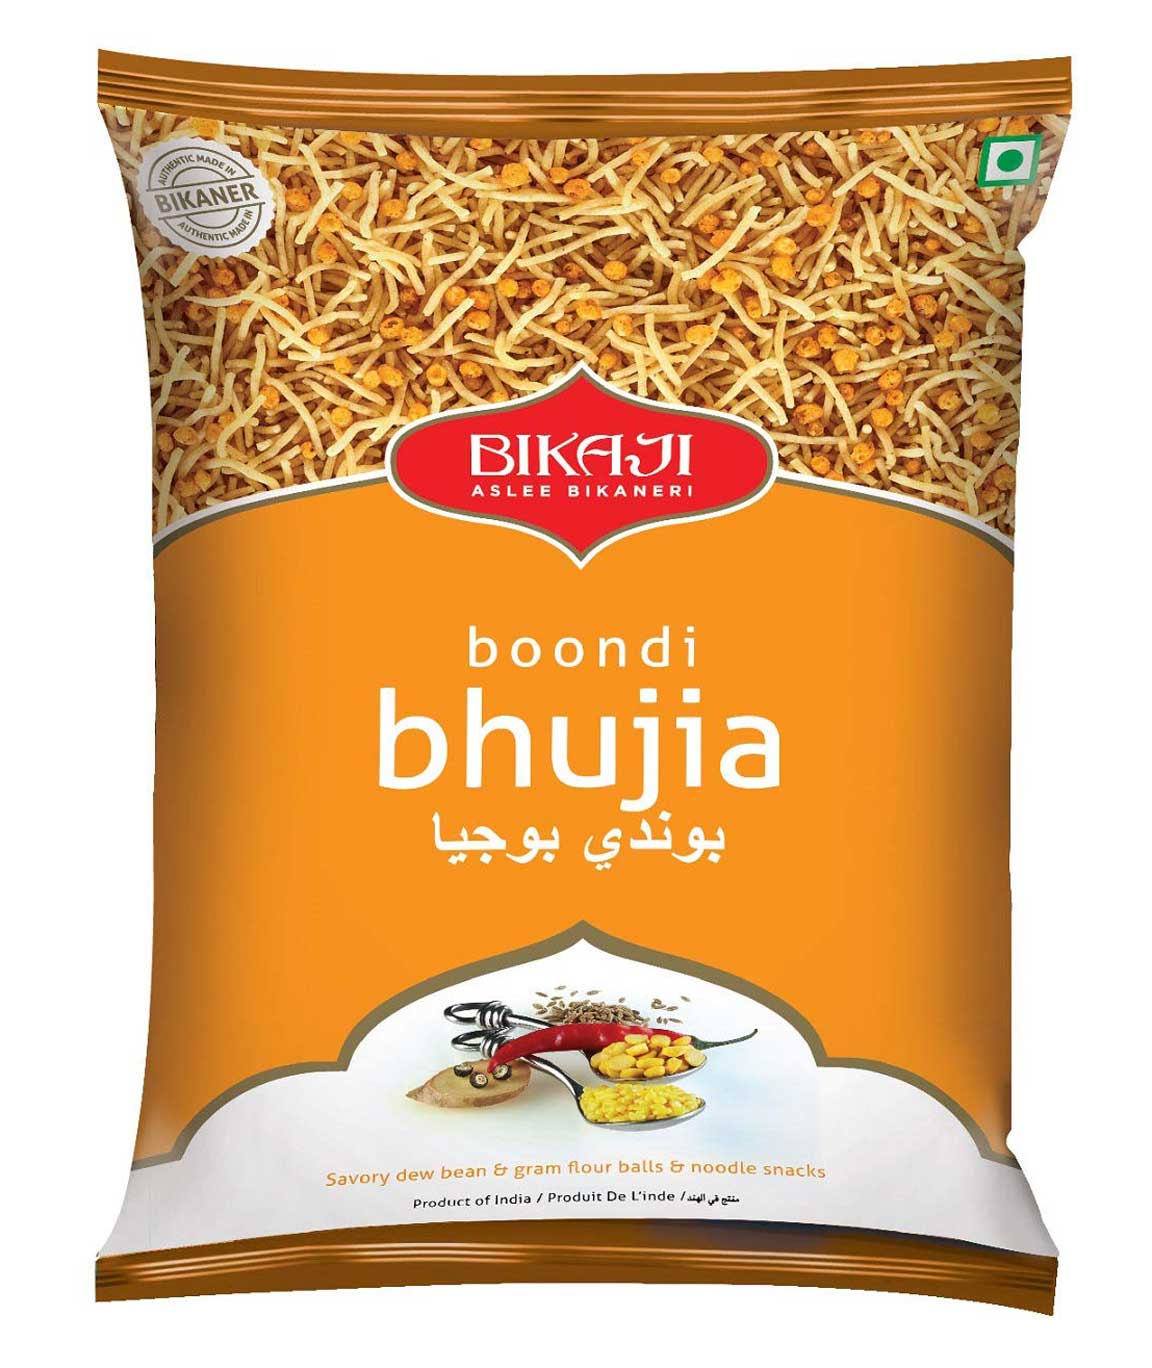 Bikaji Boondi Bhujia - Indian Namkeen Snack 400g - Pack of 1